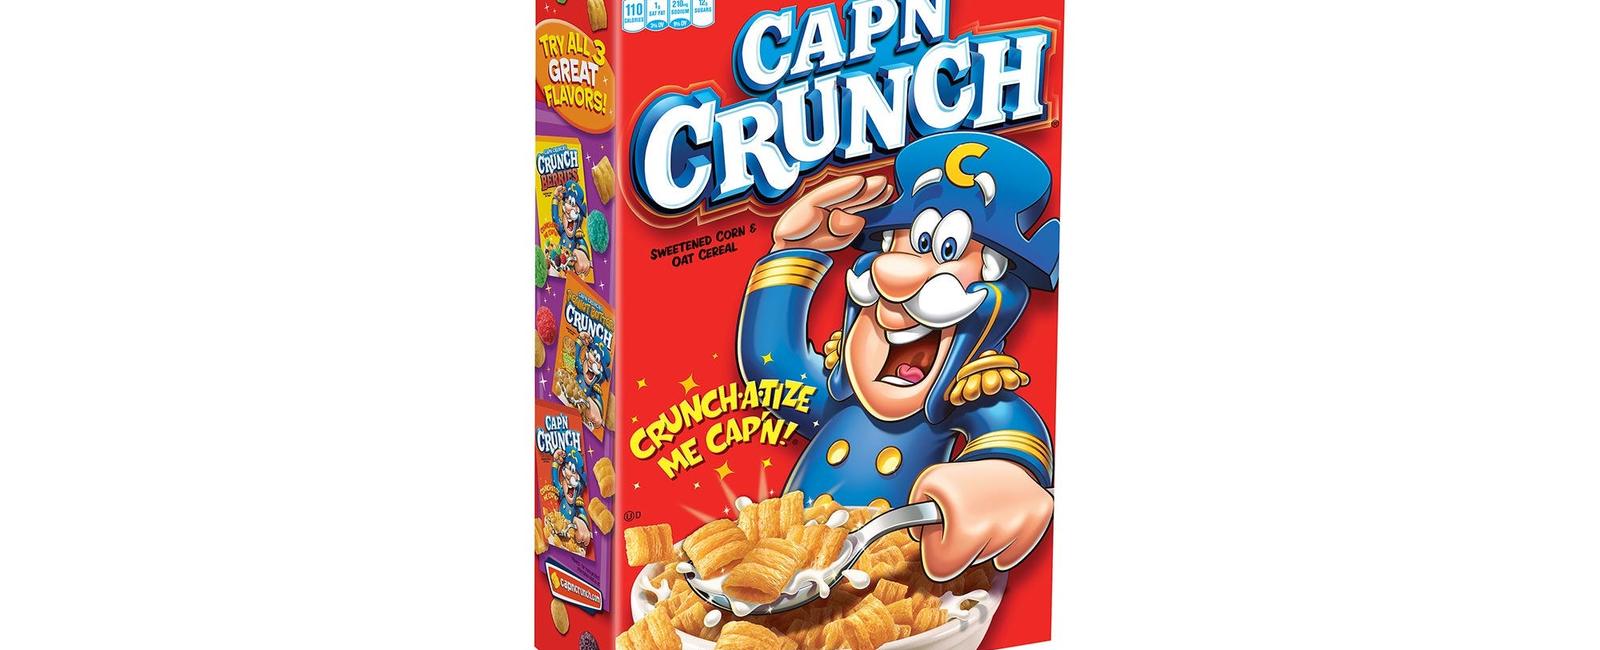 Cap n crunch s full name is horatio magellan crunch